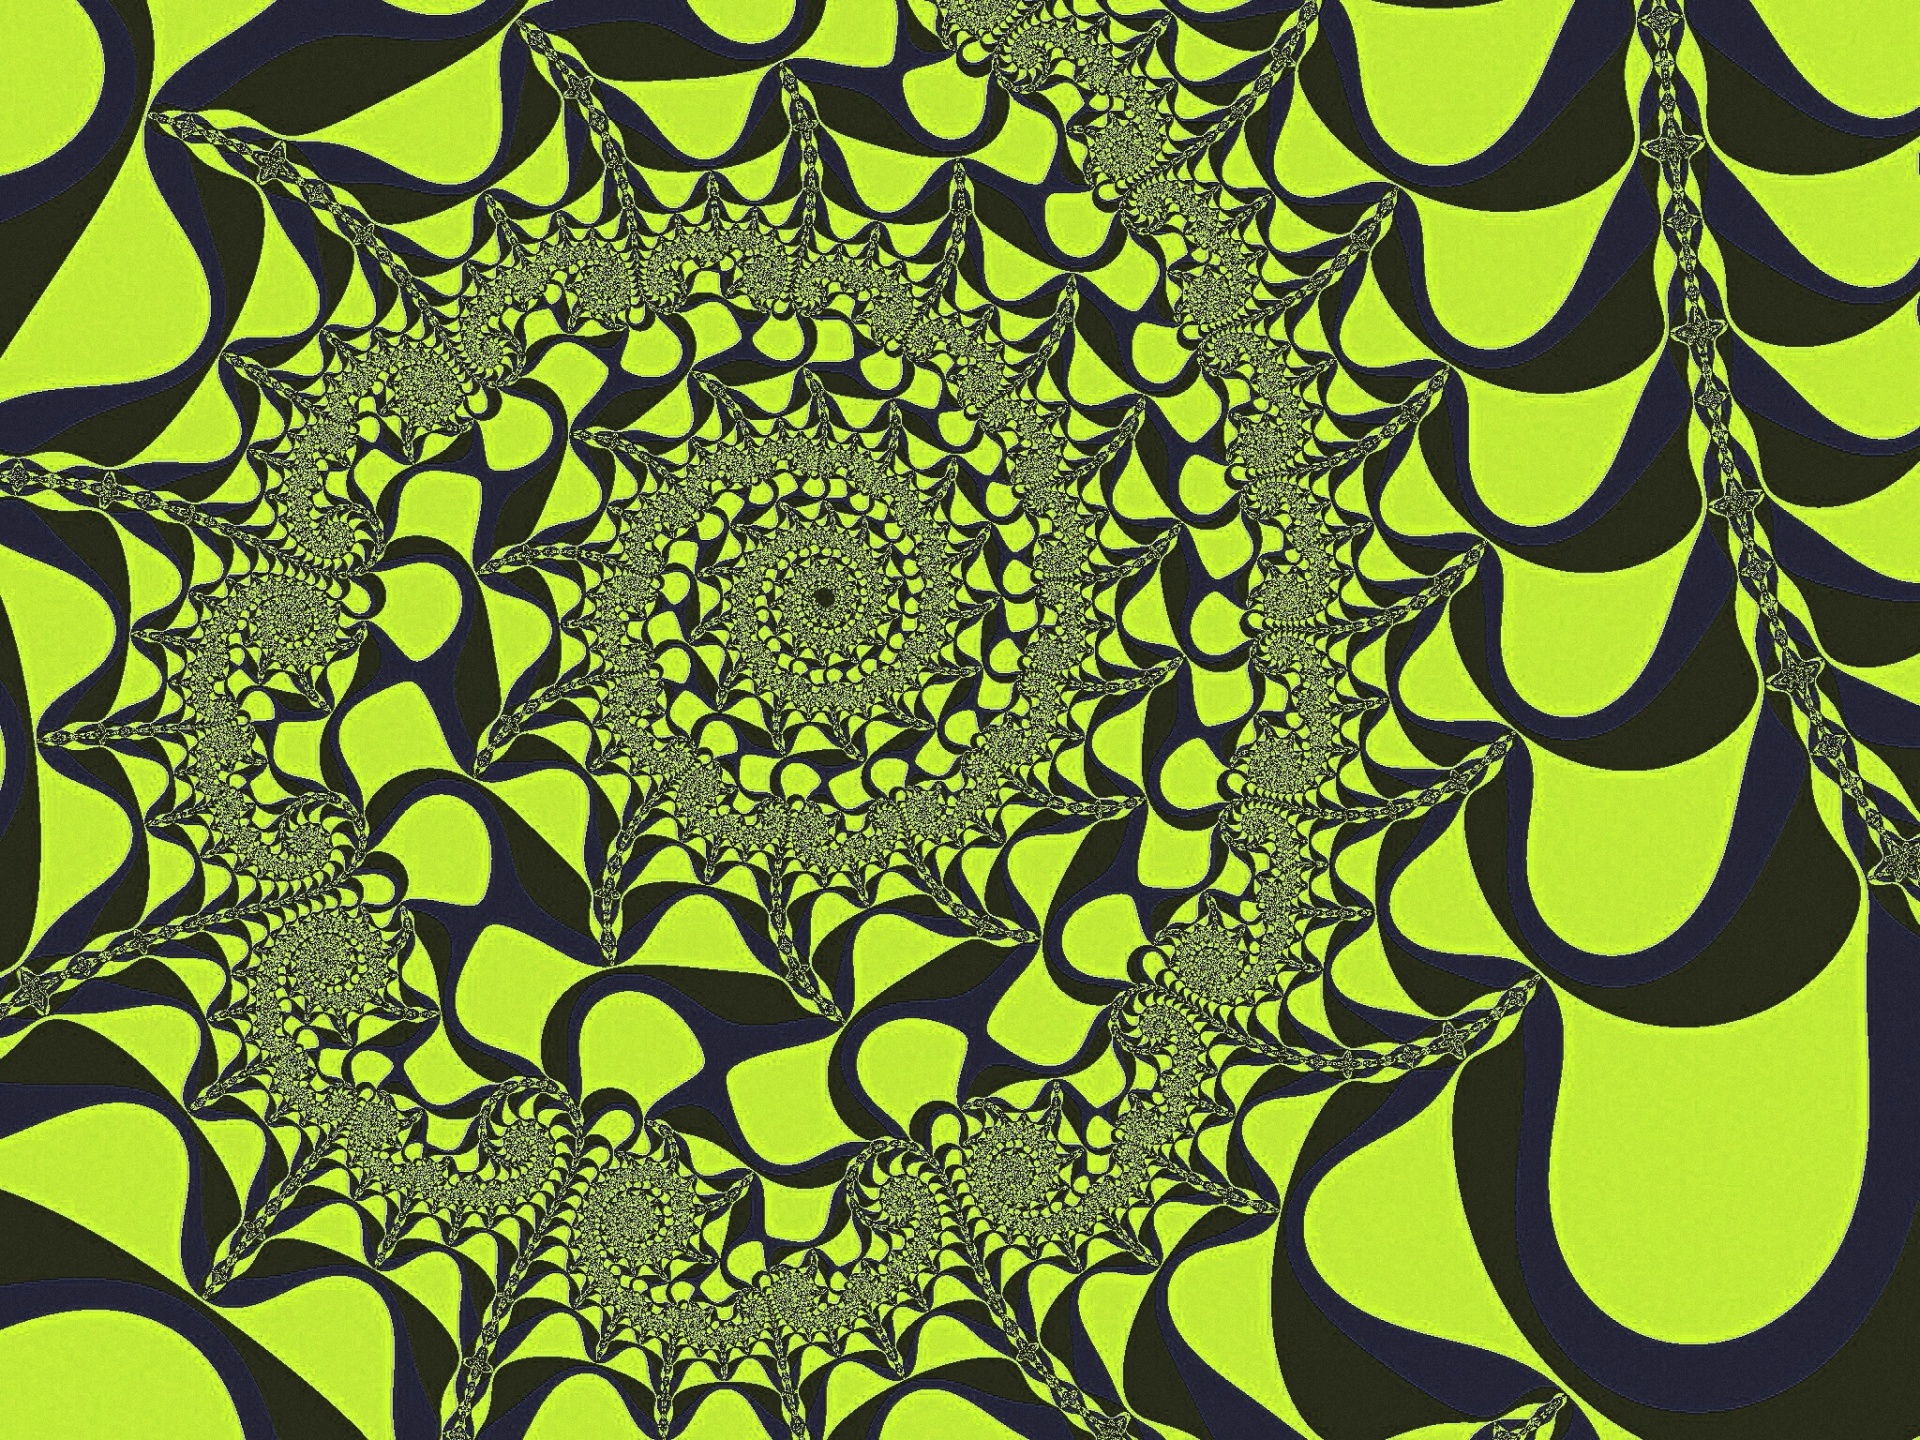 Groene fractal spiraal